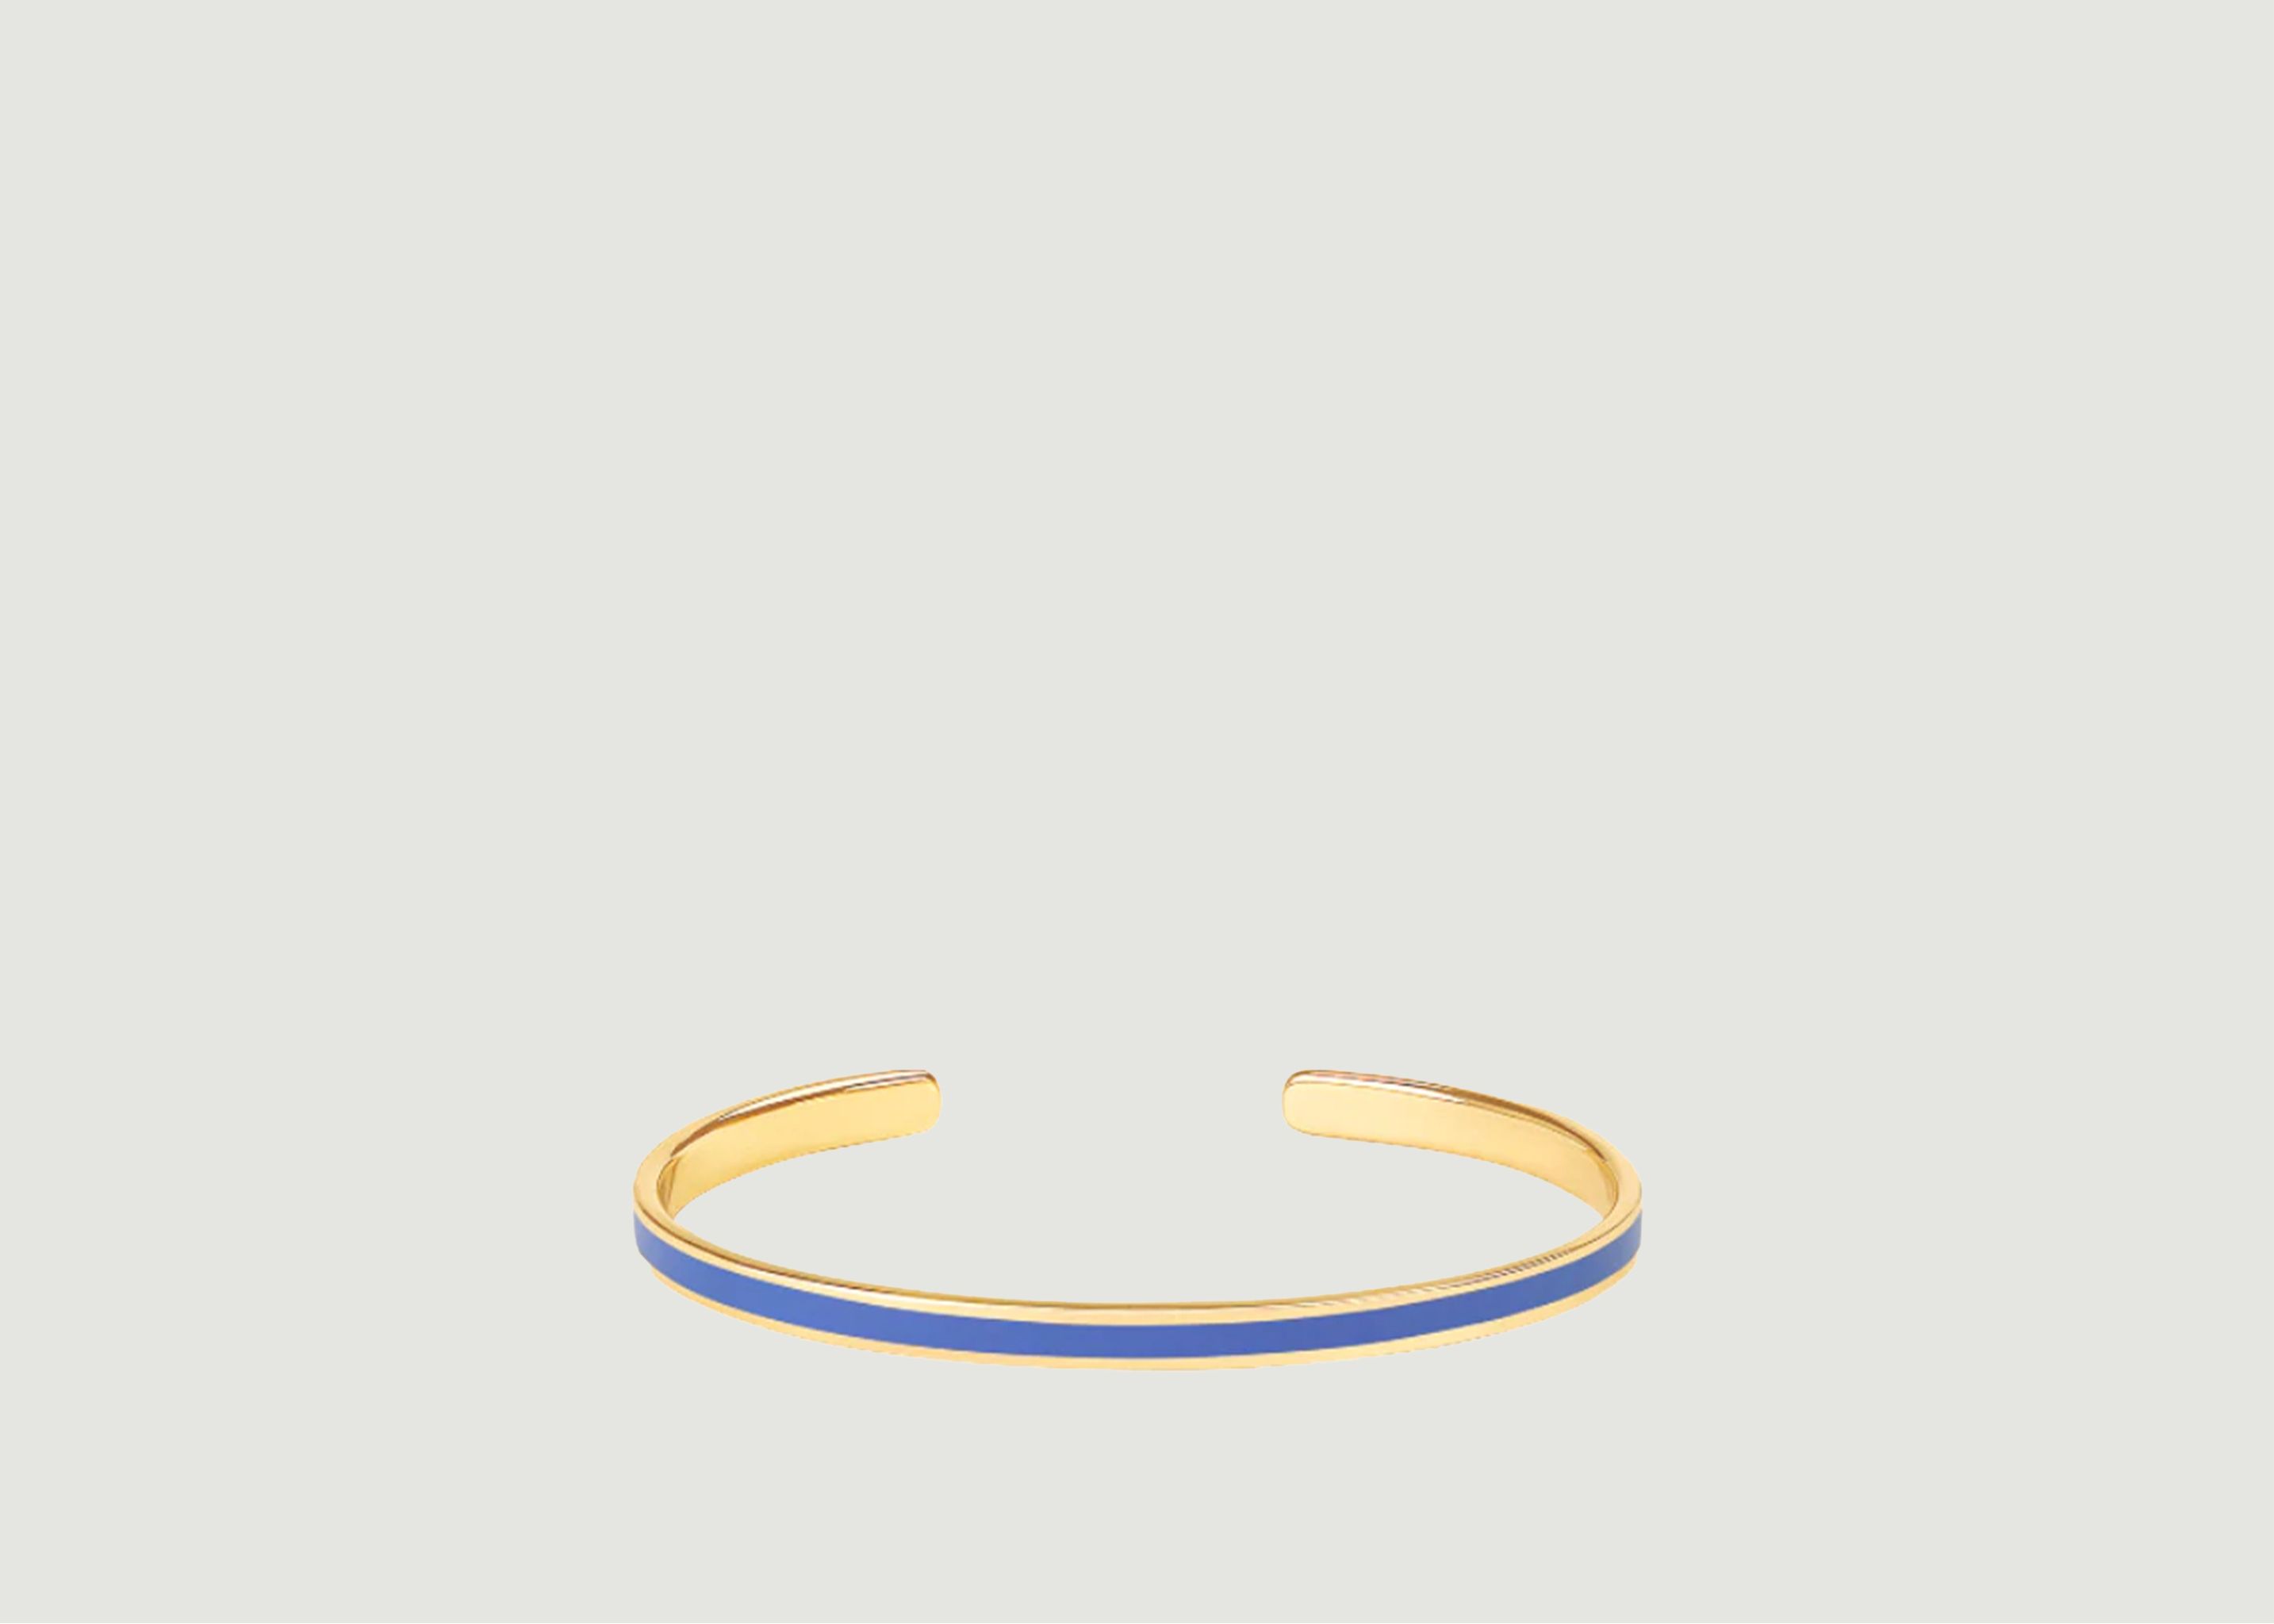 Verstellbarer offener Bangle-Ring aus vergoldetem, lackiertem Messing - Bangle Up